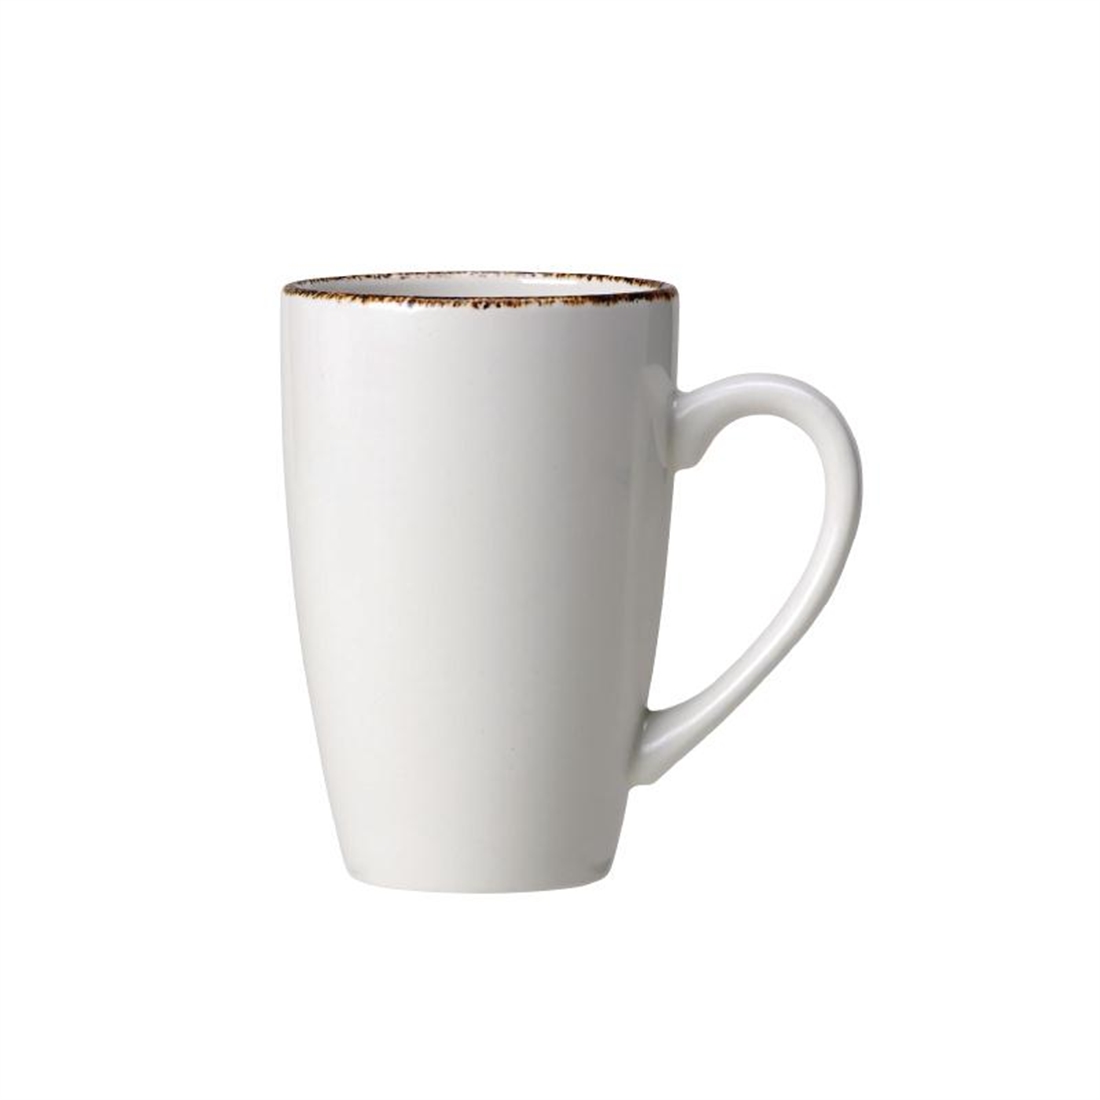 Steelite Brown Dapple Quench Mugs 285ml